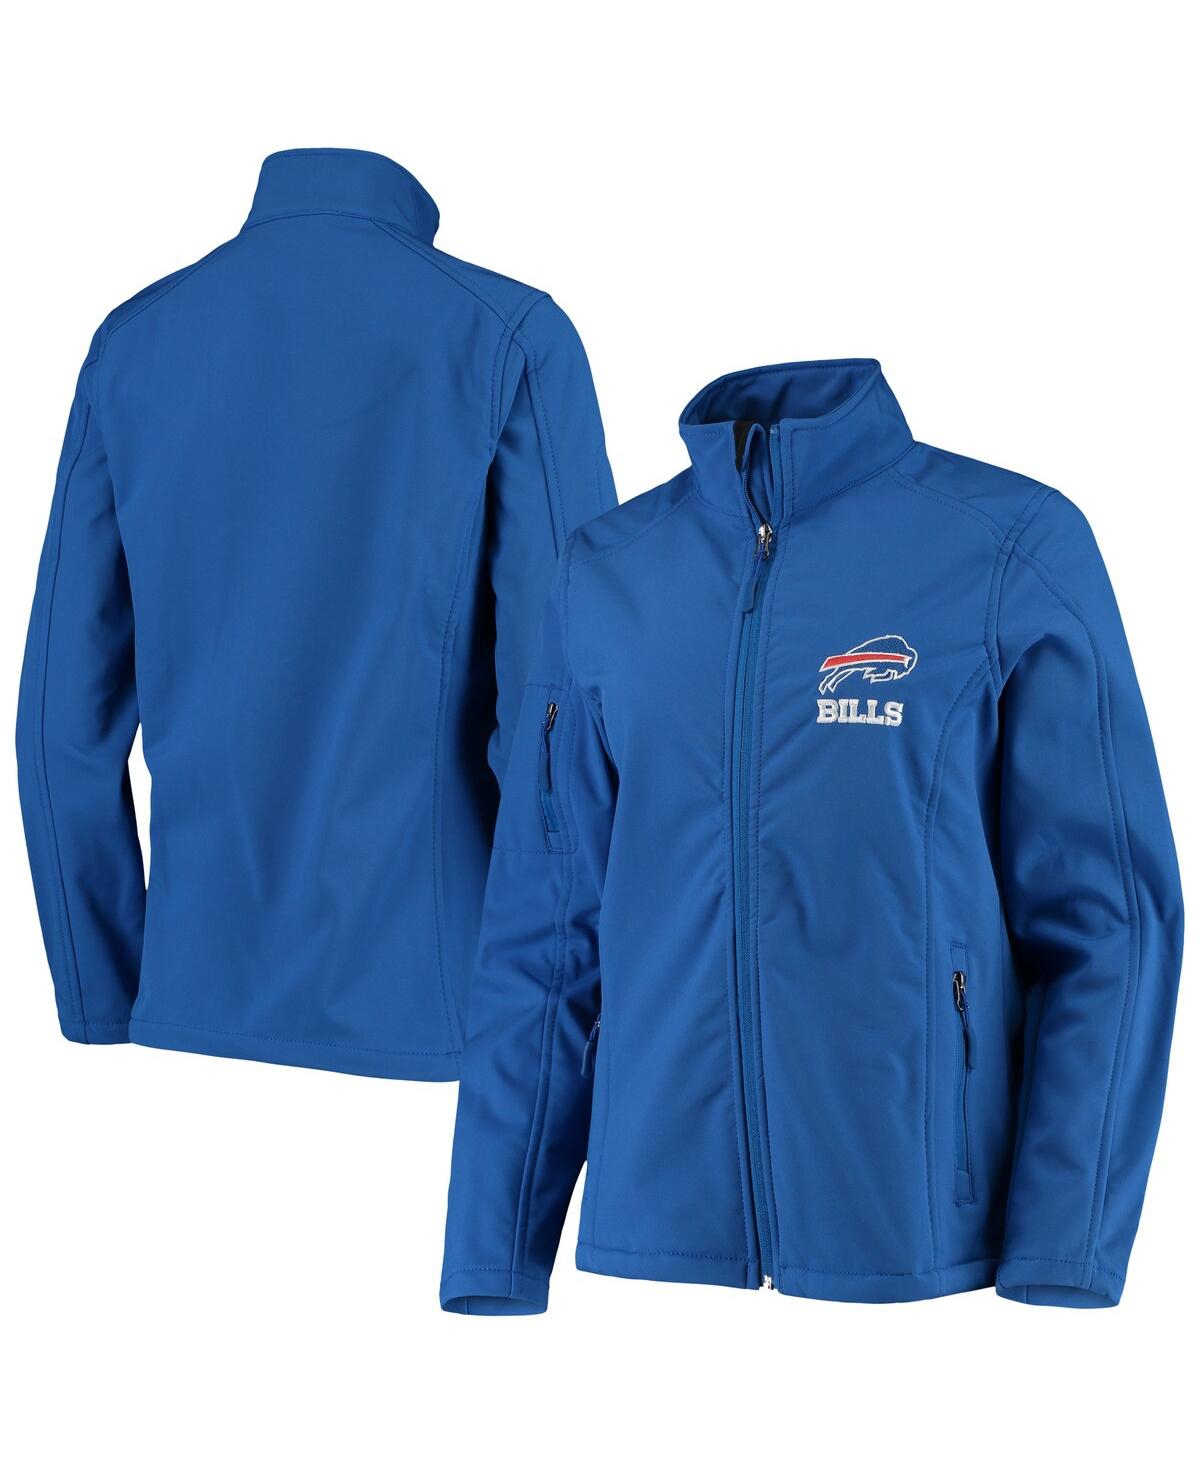 Shop Dunbrooke Women's Royal Buffalo Bills Full-zip Sonoma Softshell Jacket